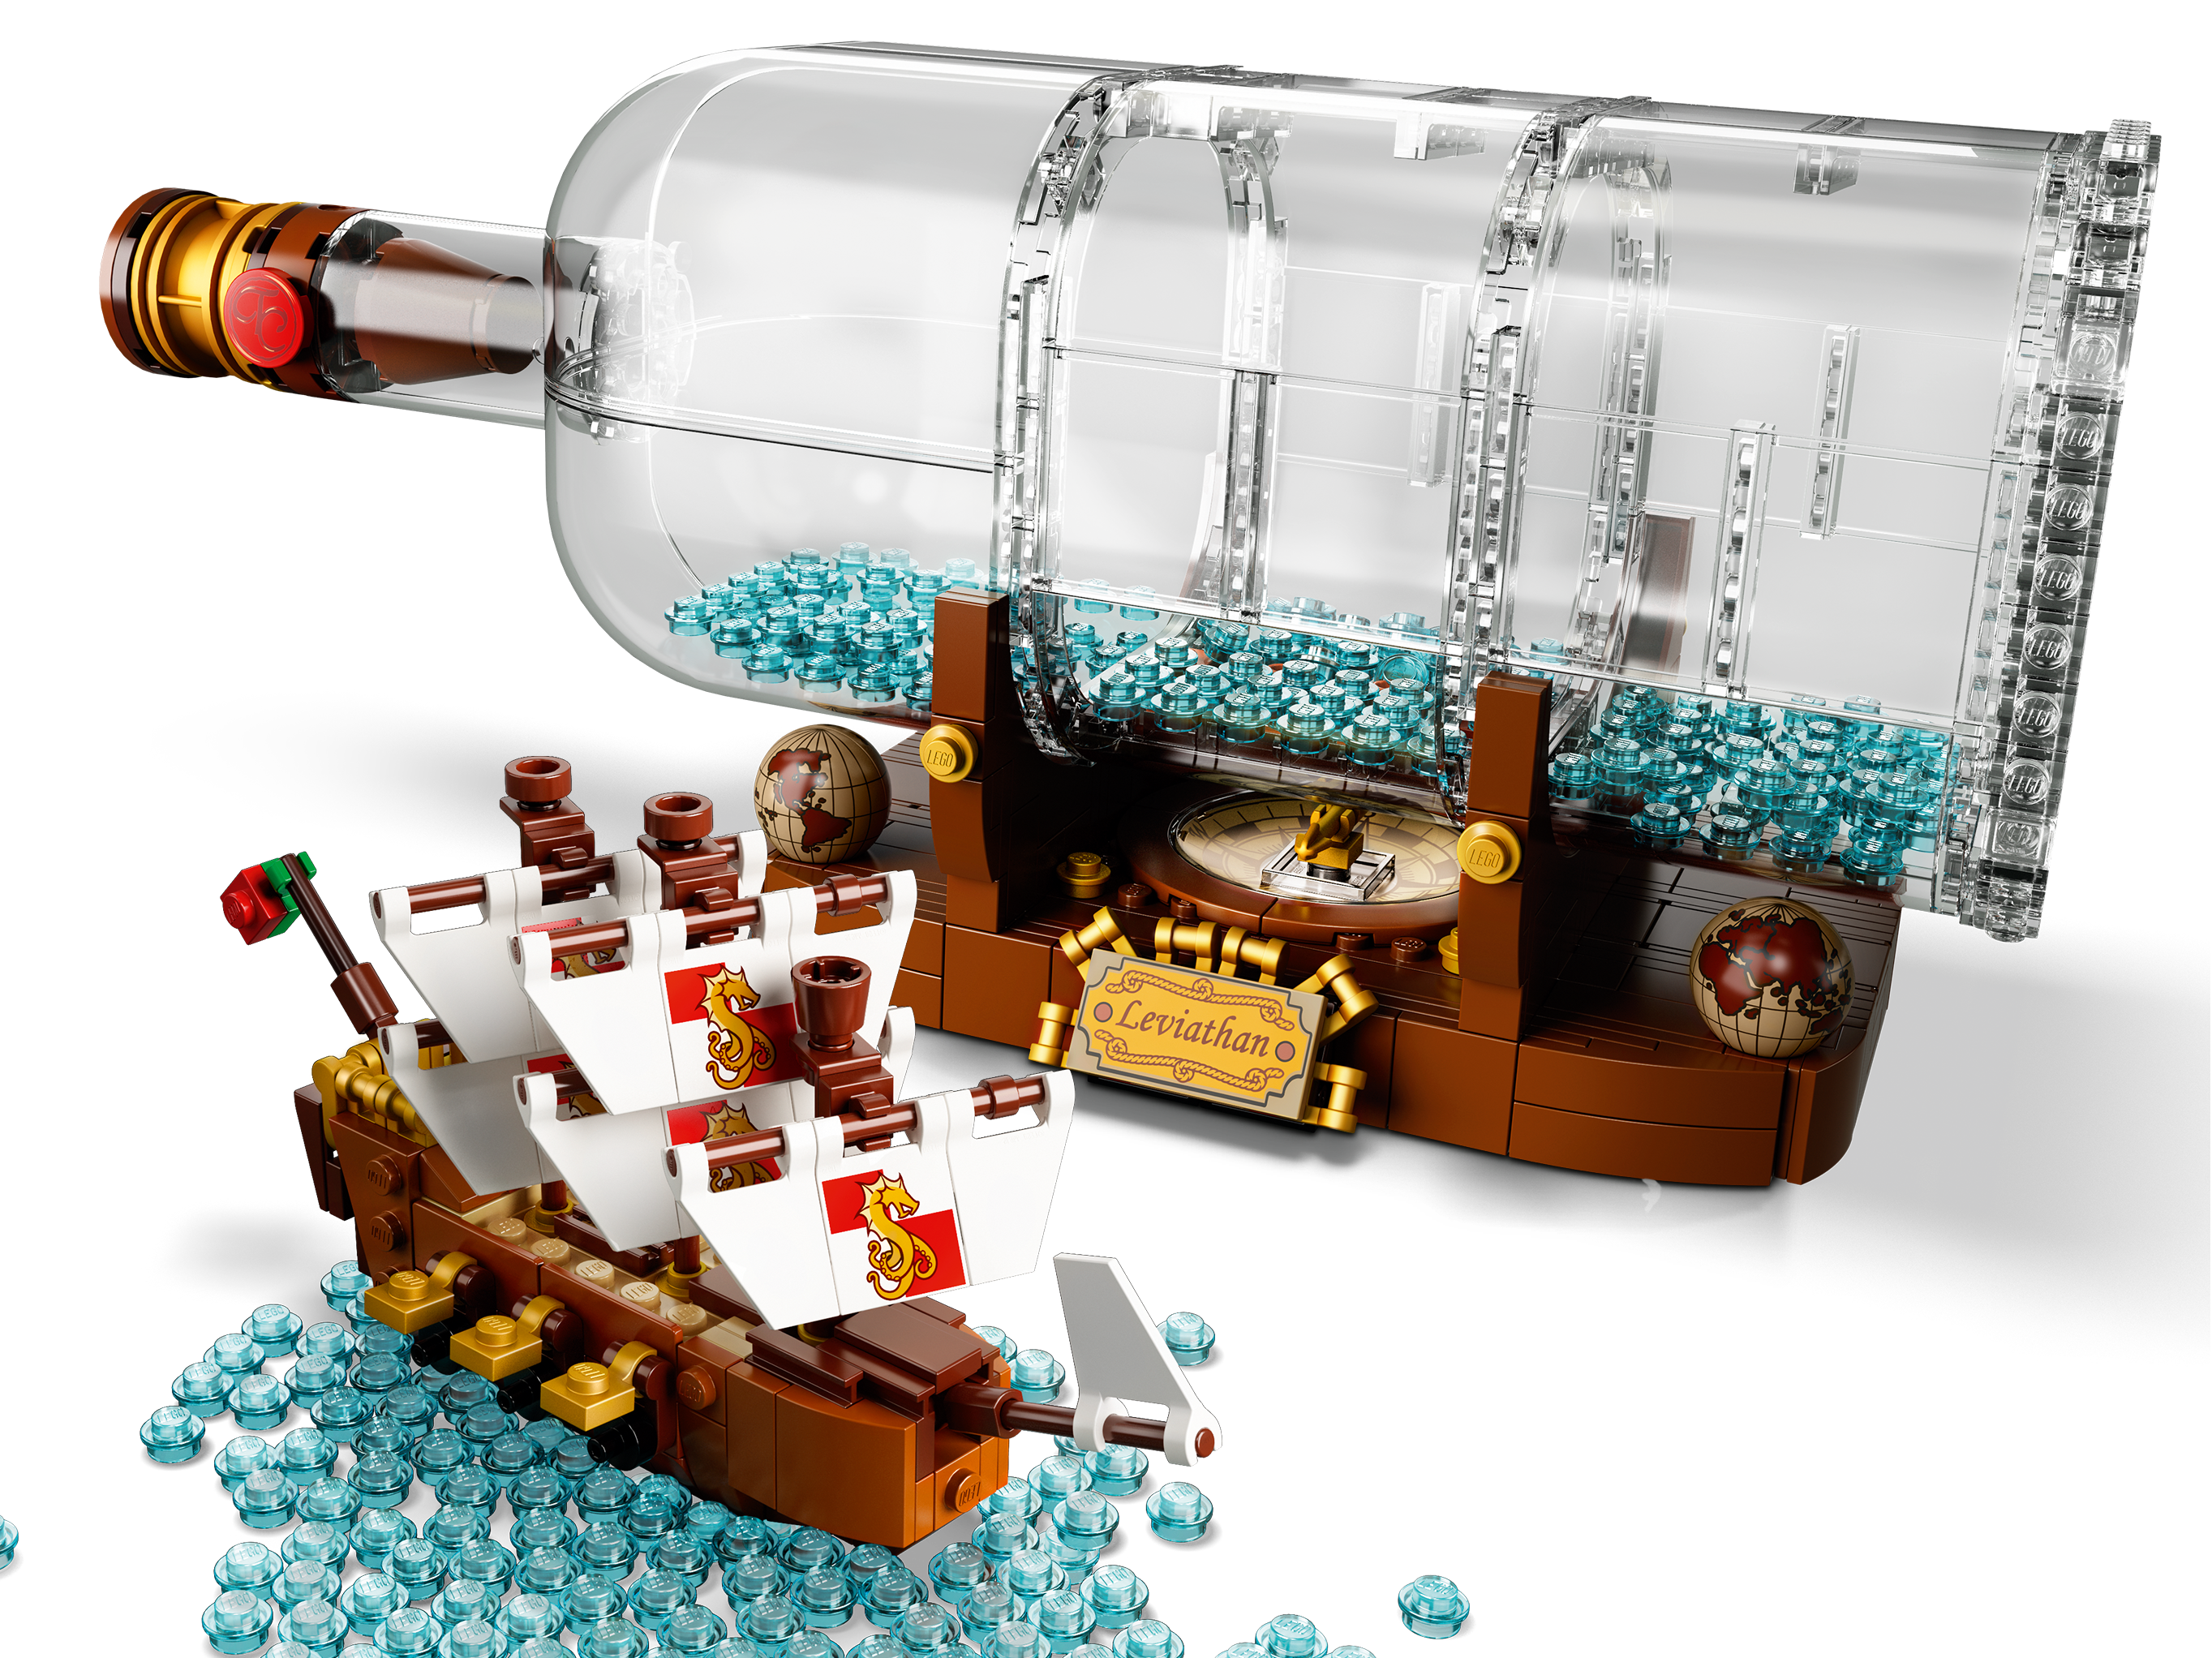 LEGO 21313 Ideas Ship in a Bottle for sale online